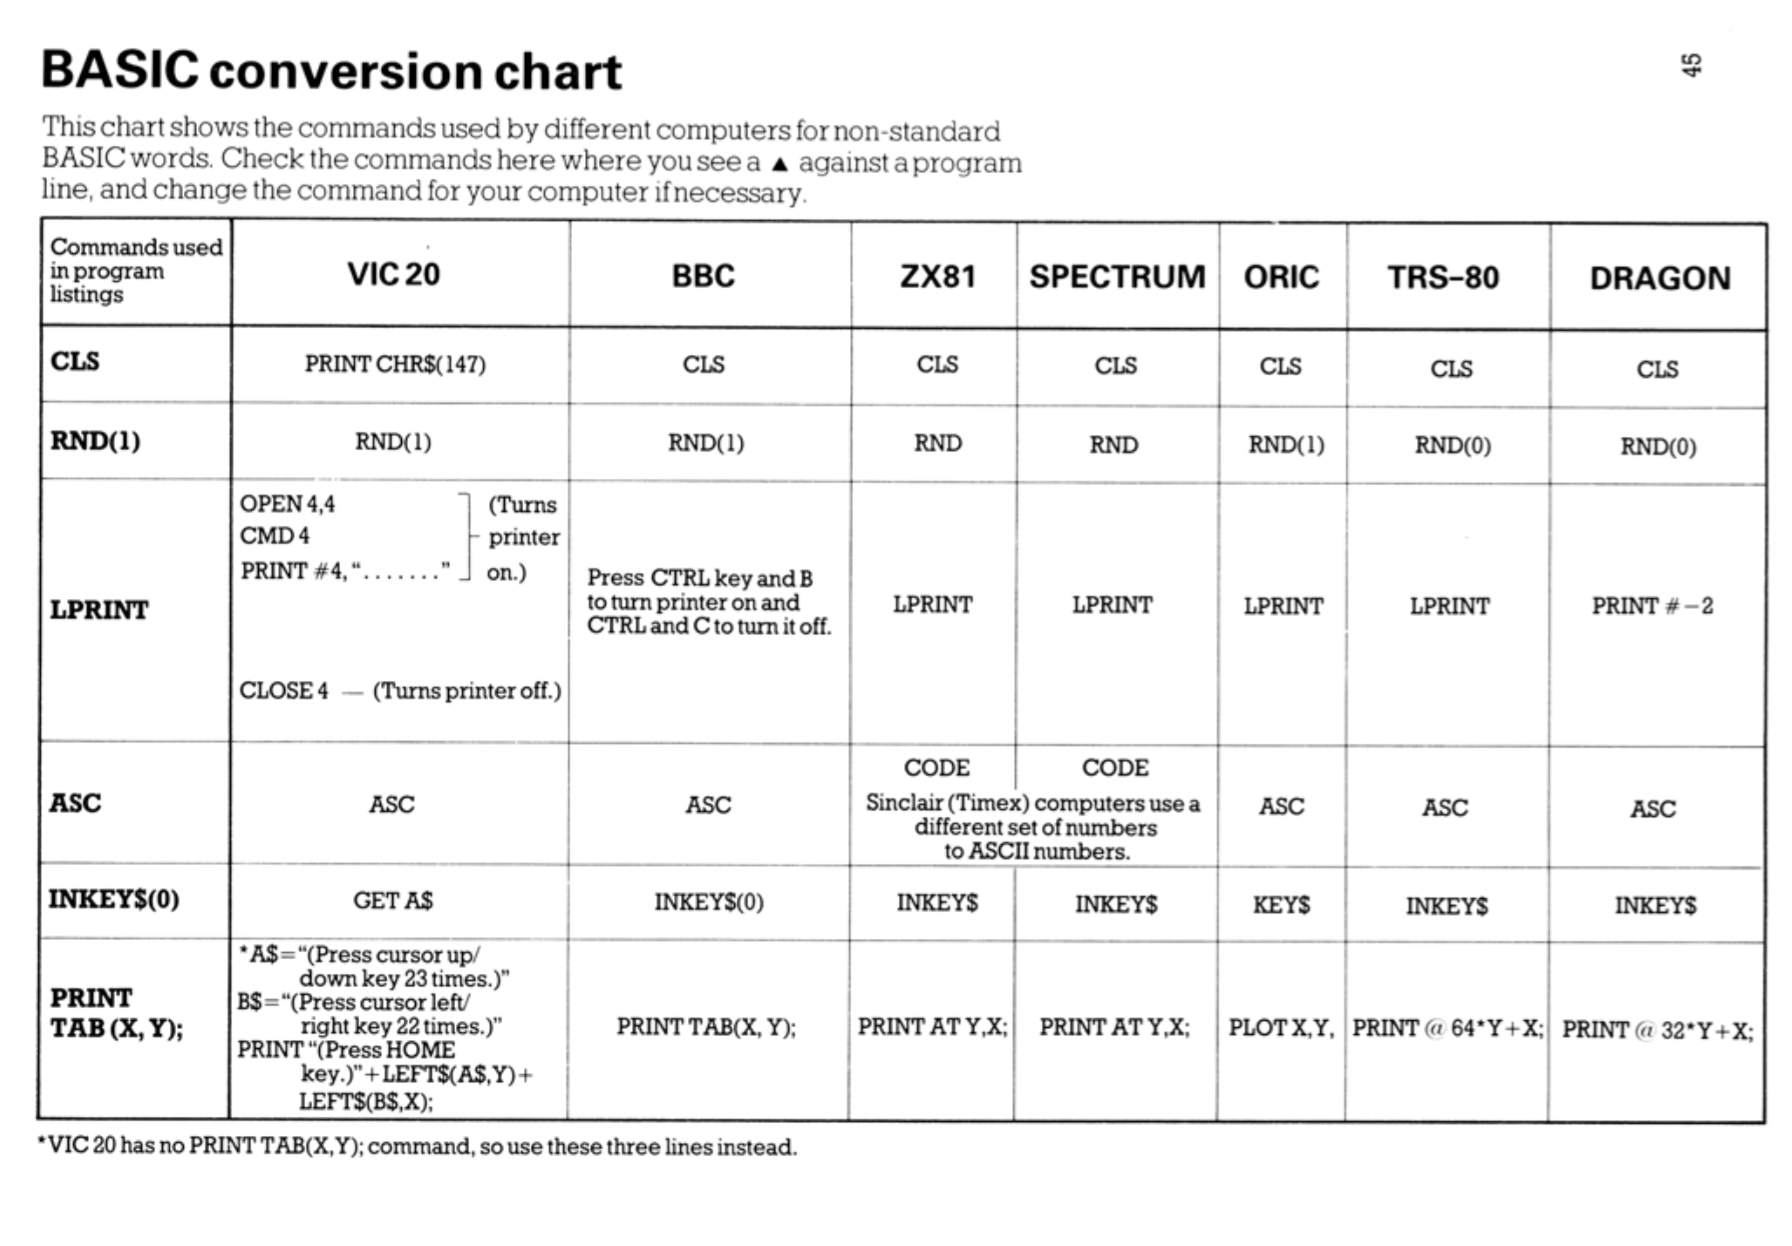 Example BASIC conversion chart